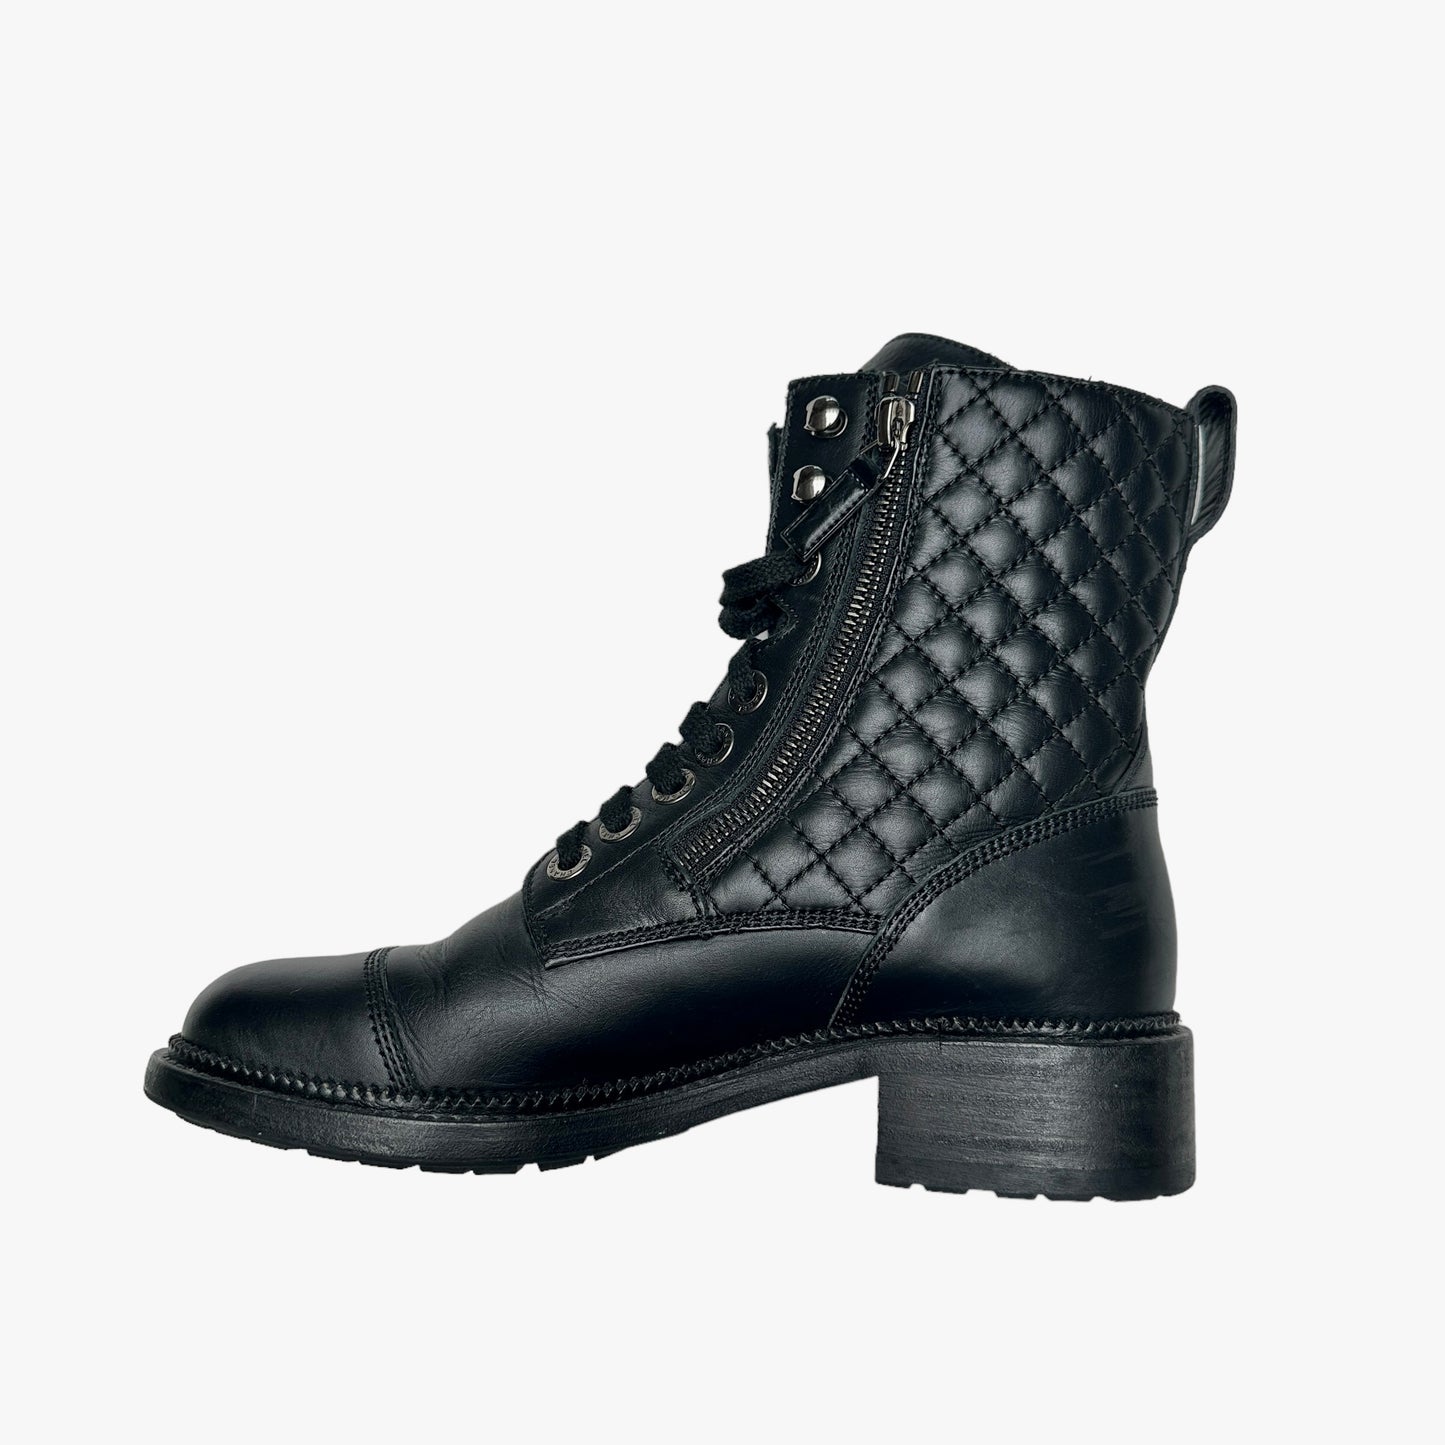 Black Leather Combat Boots - 7